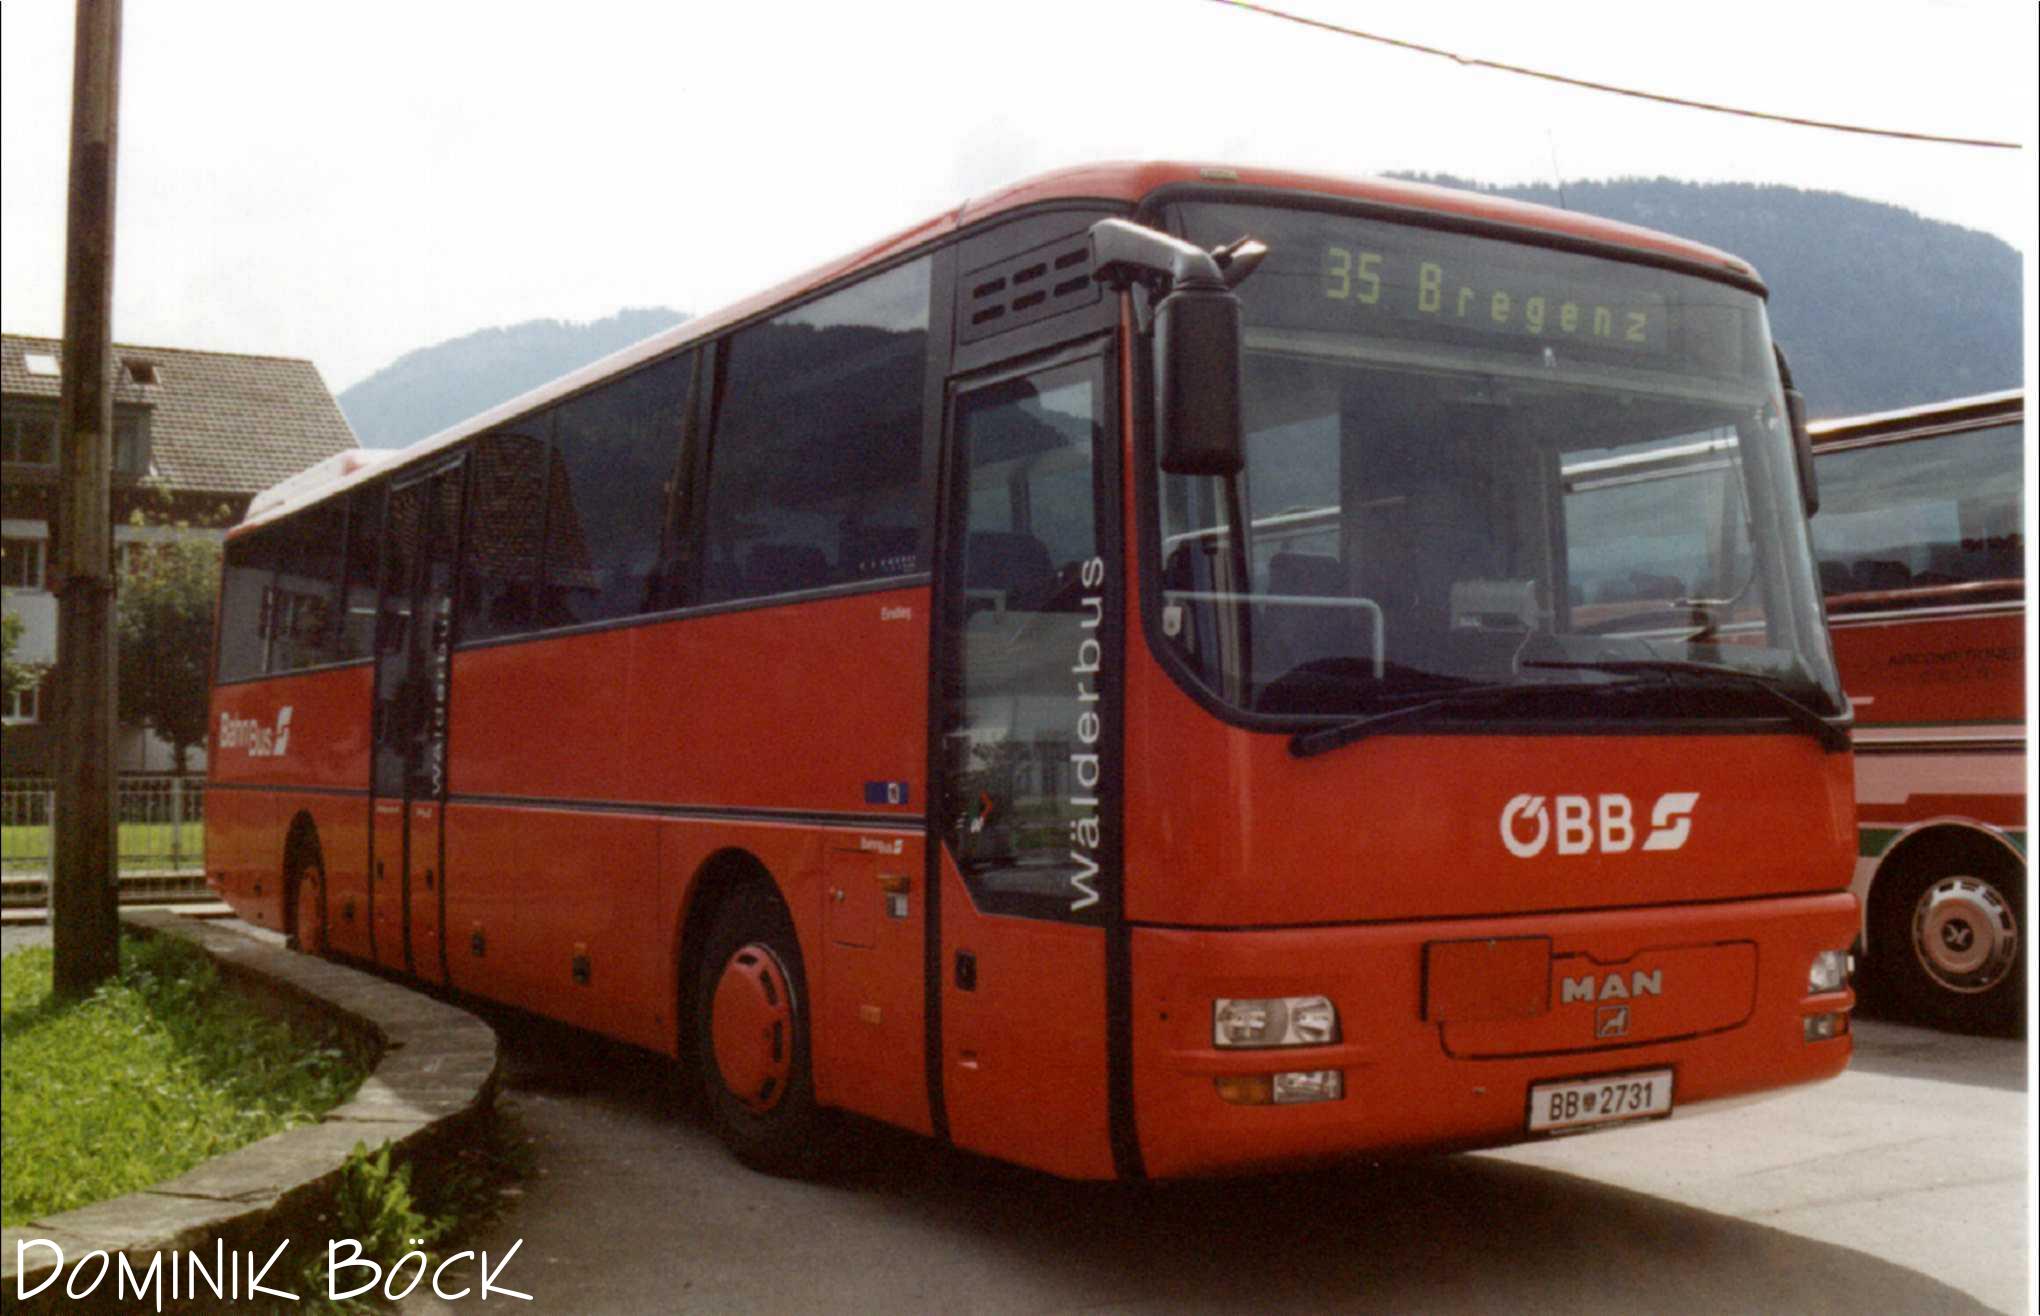 BB 2731